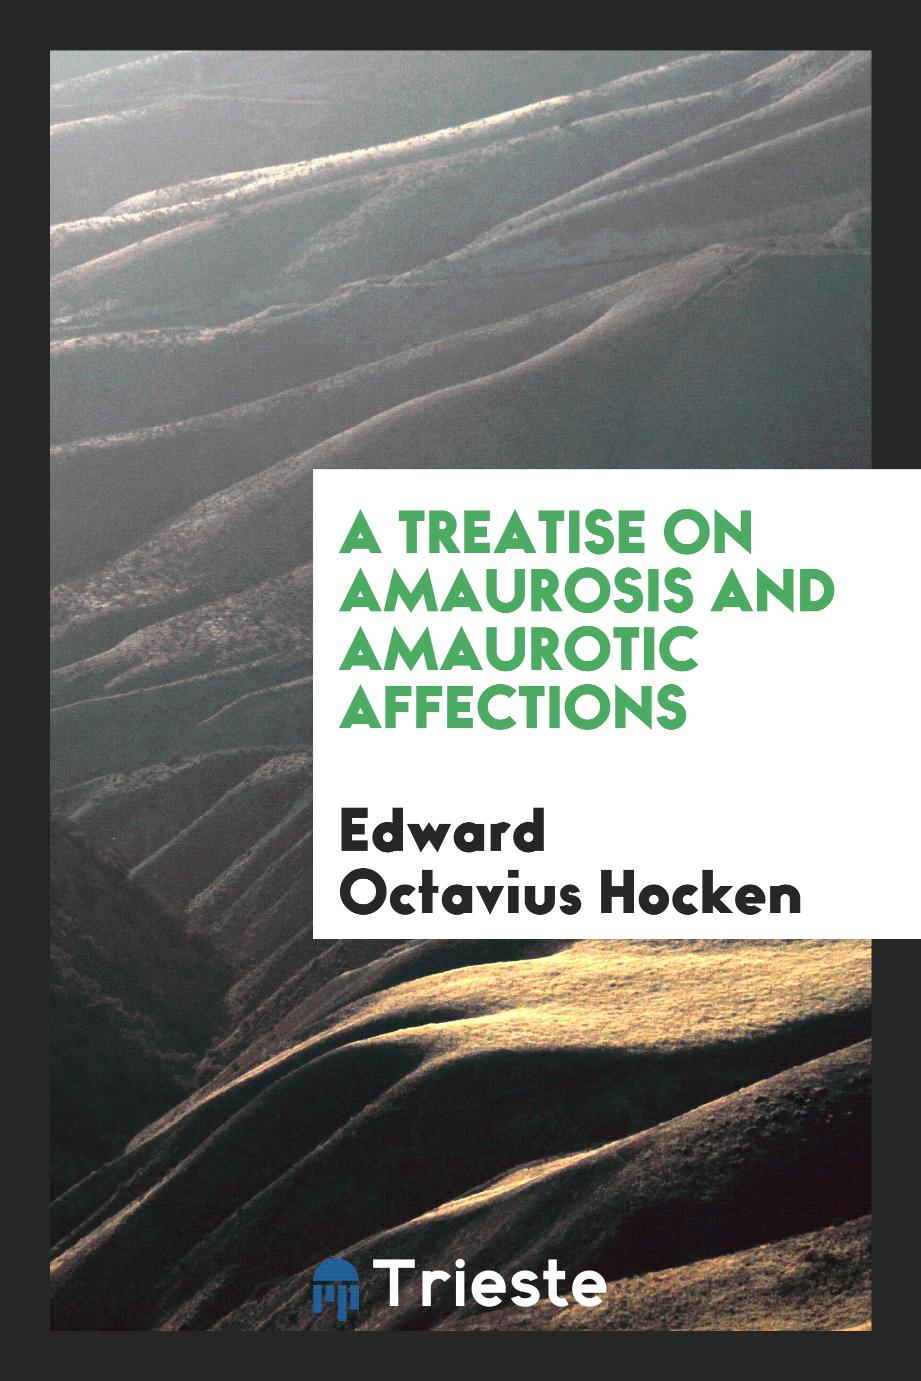 Edward Octavius Hocken - A treatise on amaurosis and amaurotic affections